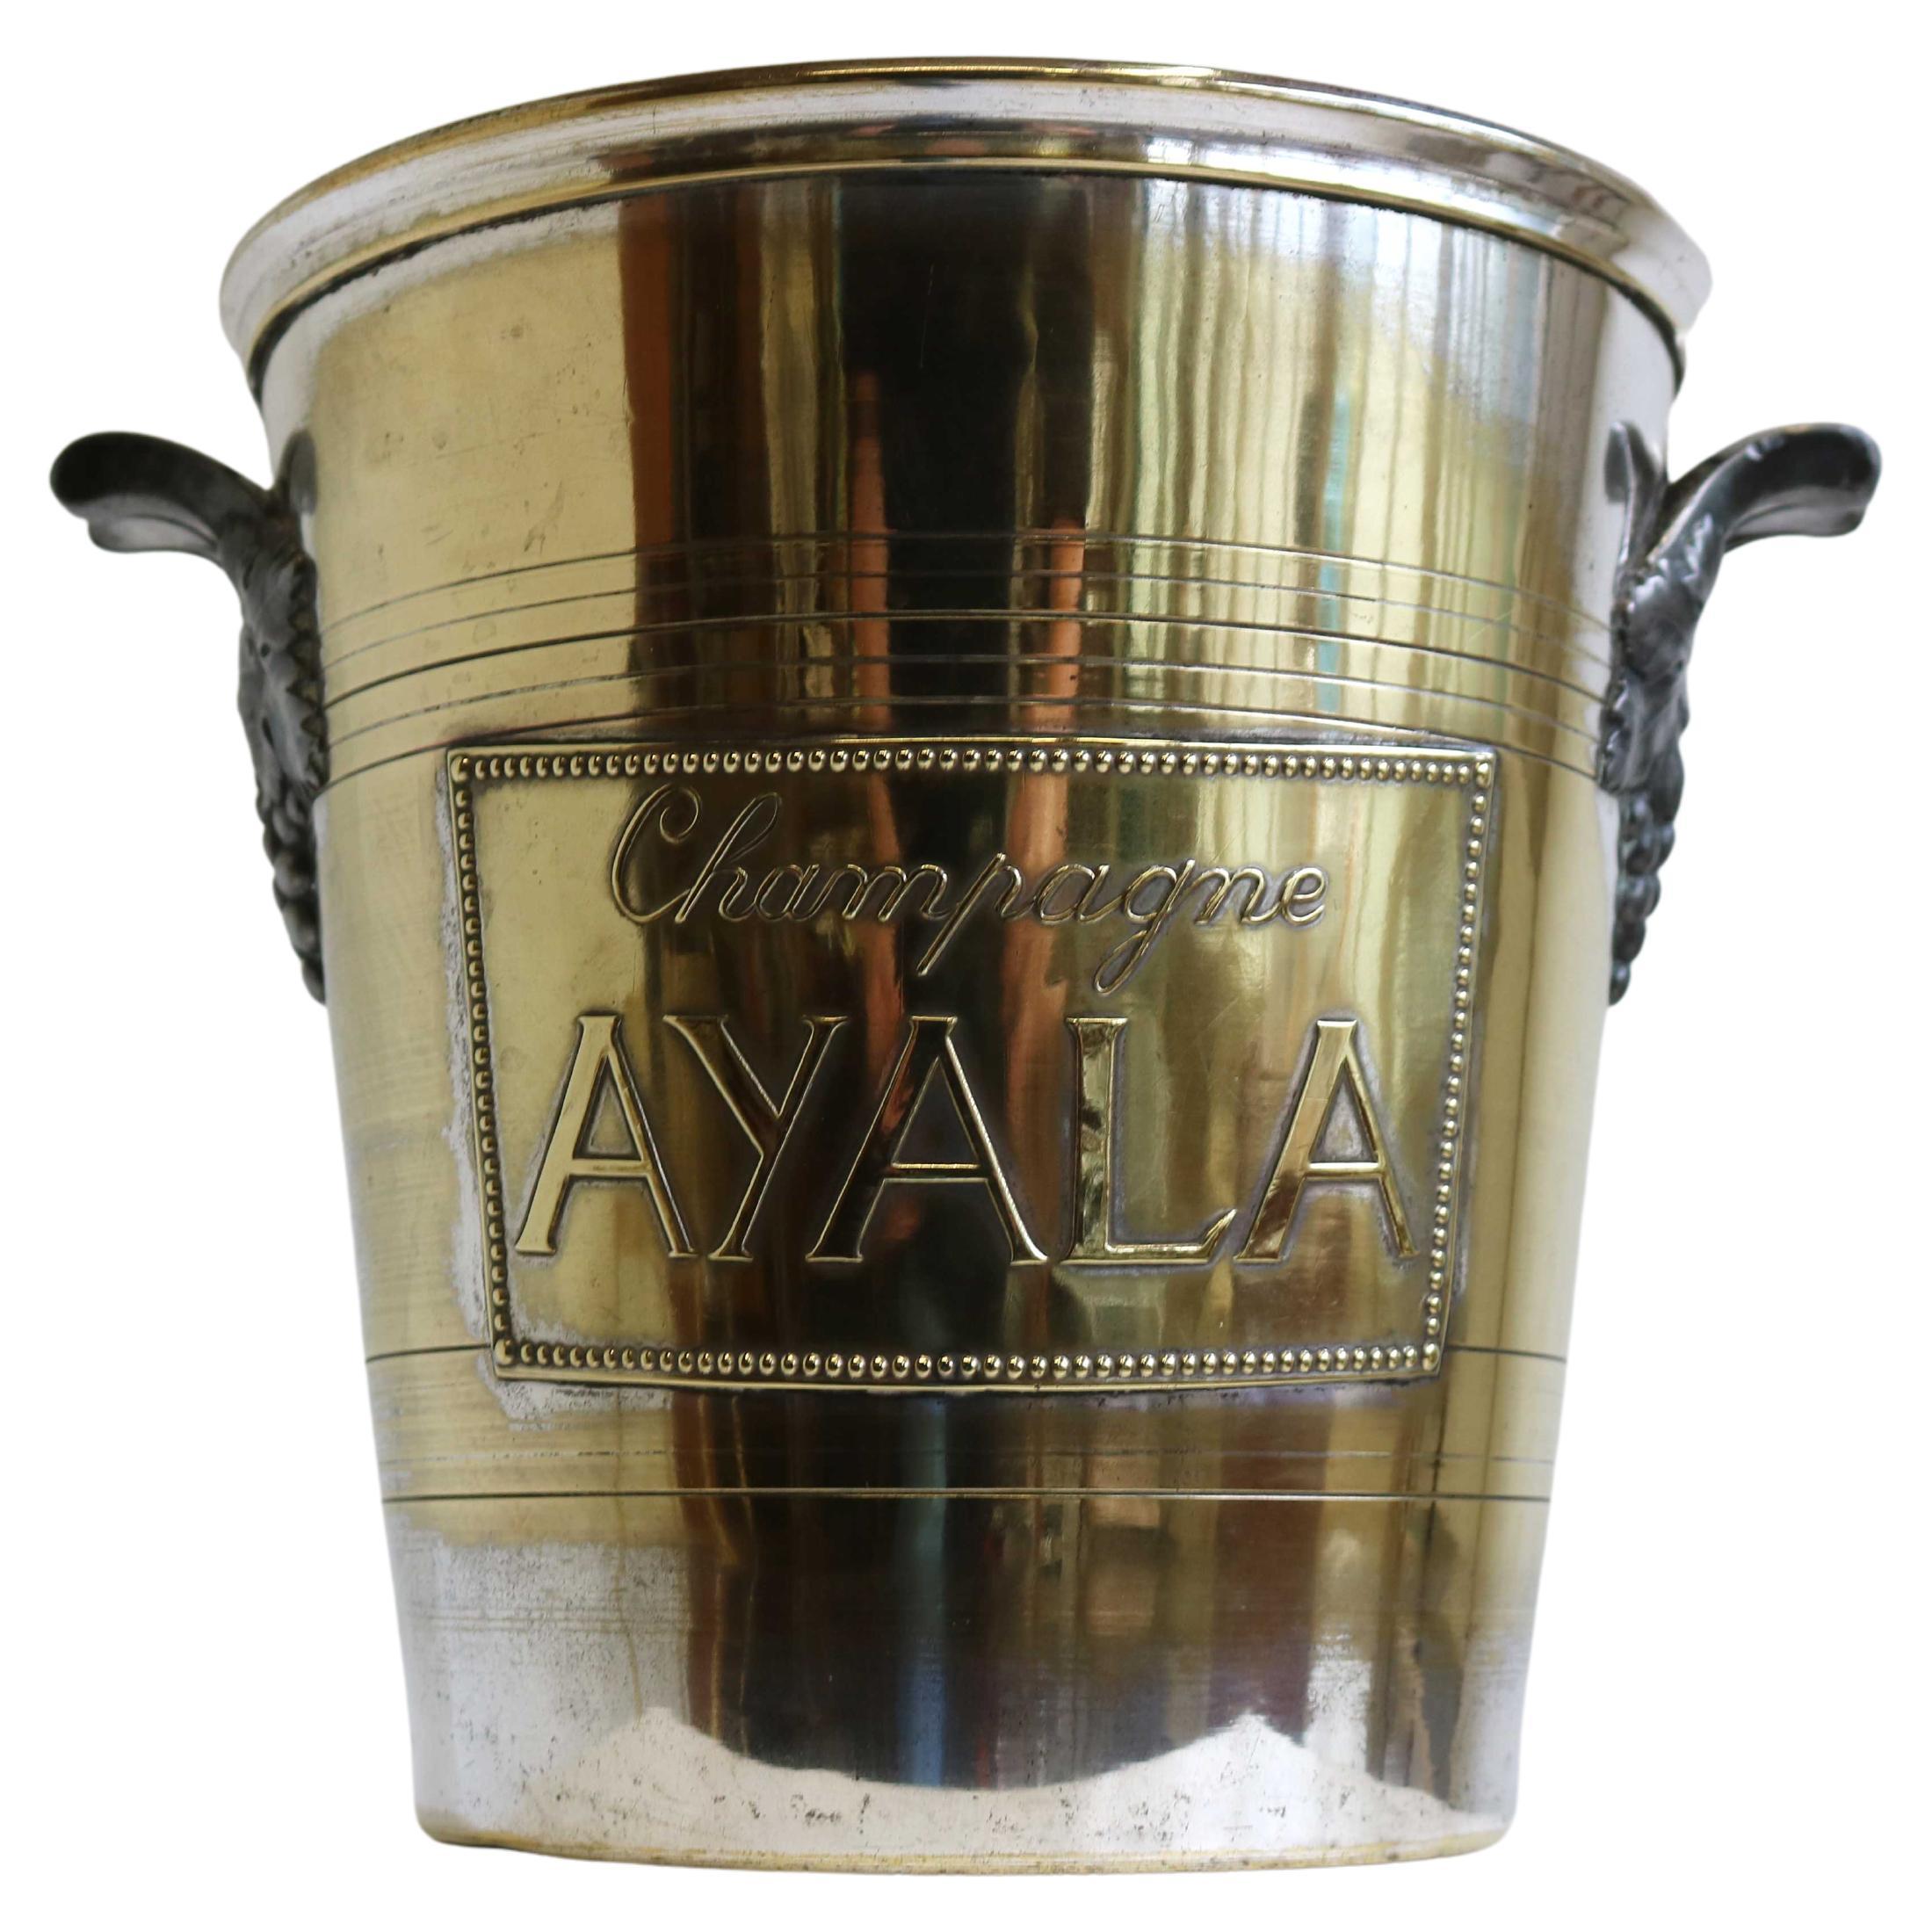 Ayala / Argit Champagne Cooler, Ice Bucket, Wine Cooler, France, Art Deco 1930s